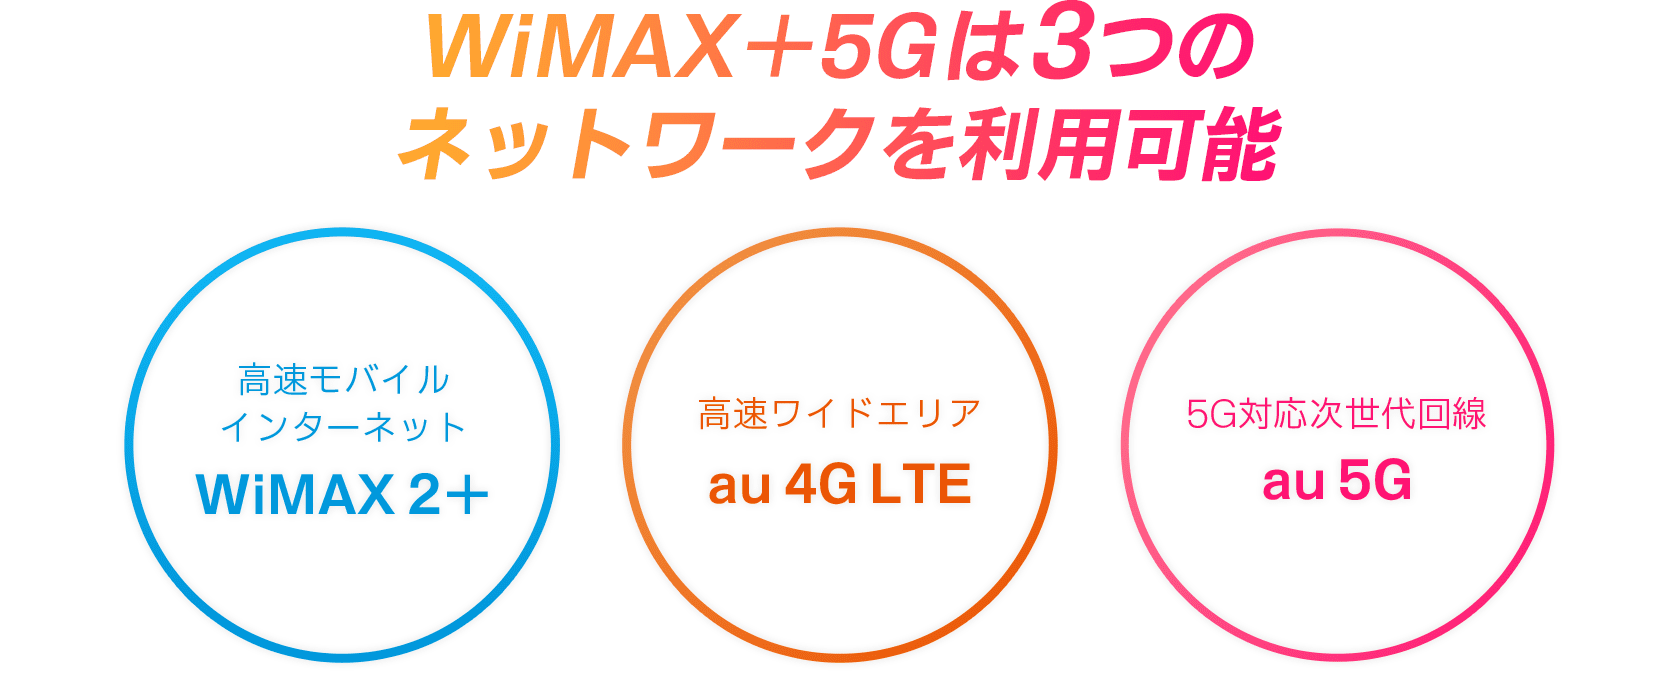 WiMAX5Gは3つのネットワークを利用可能